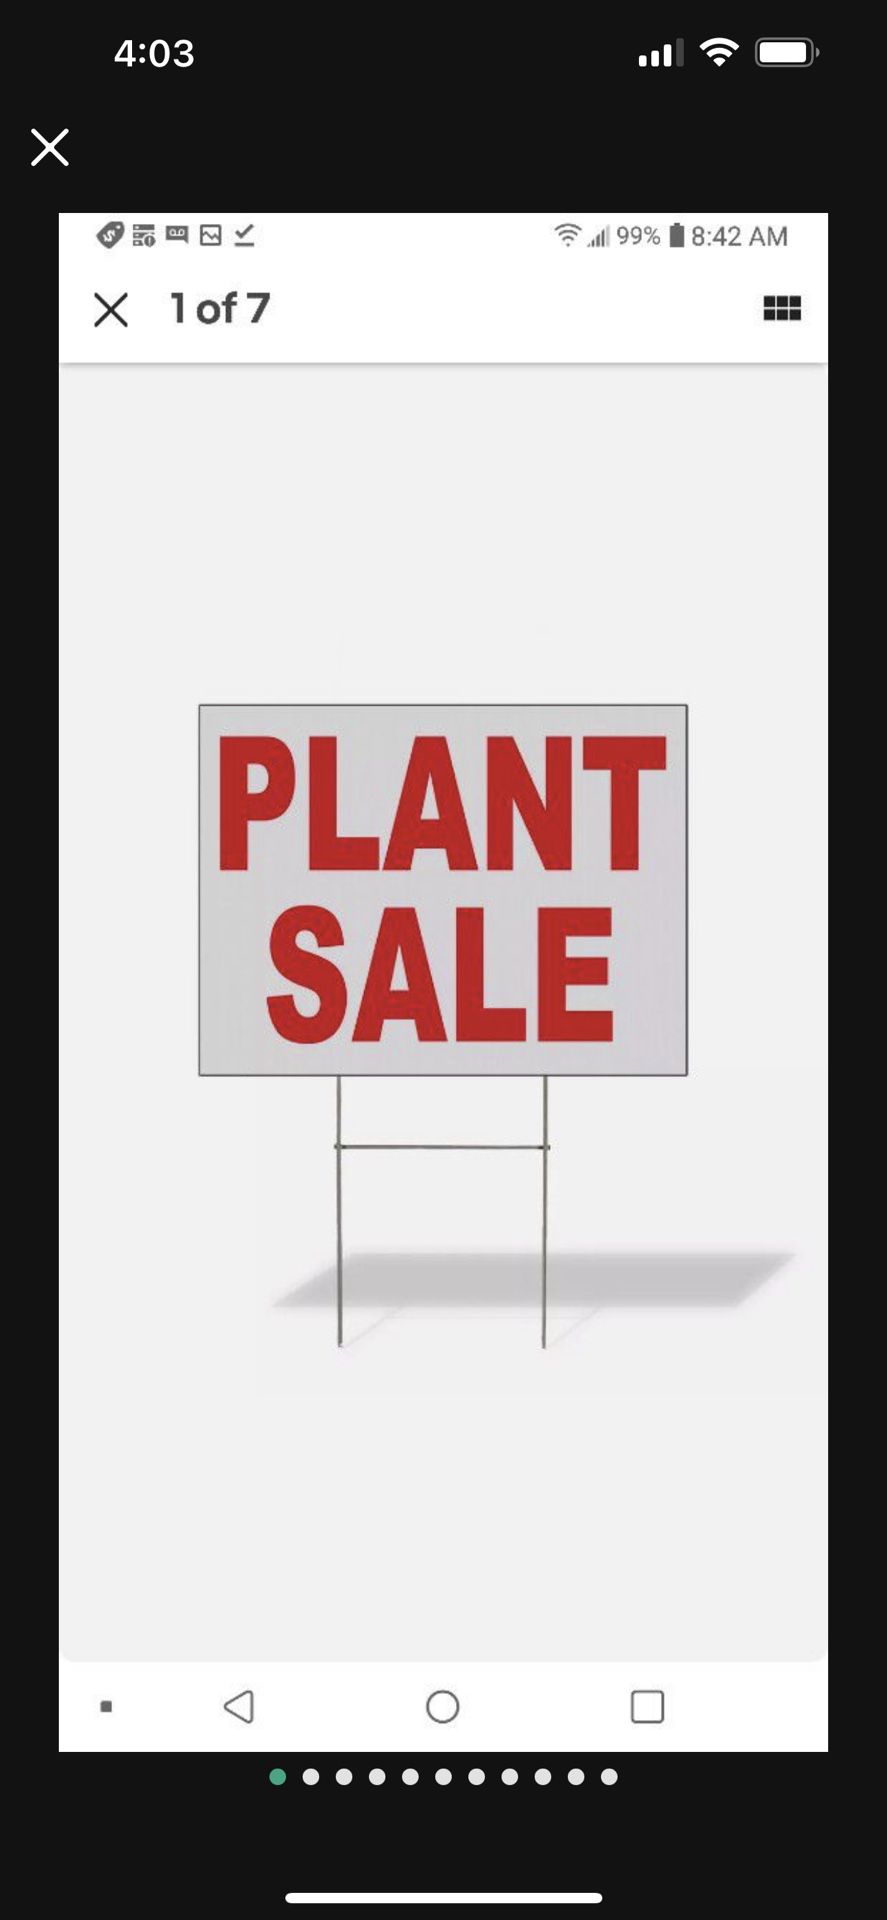 BIG PLANT SALE IN LARGO GOOD PRICES